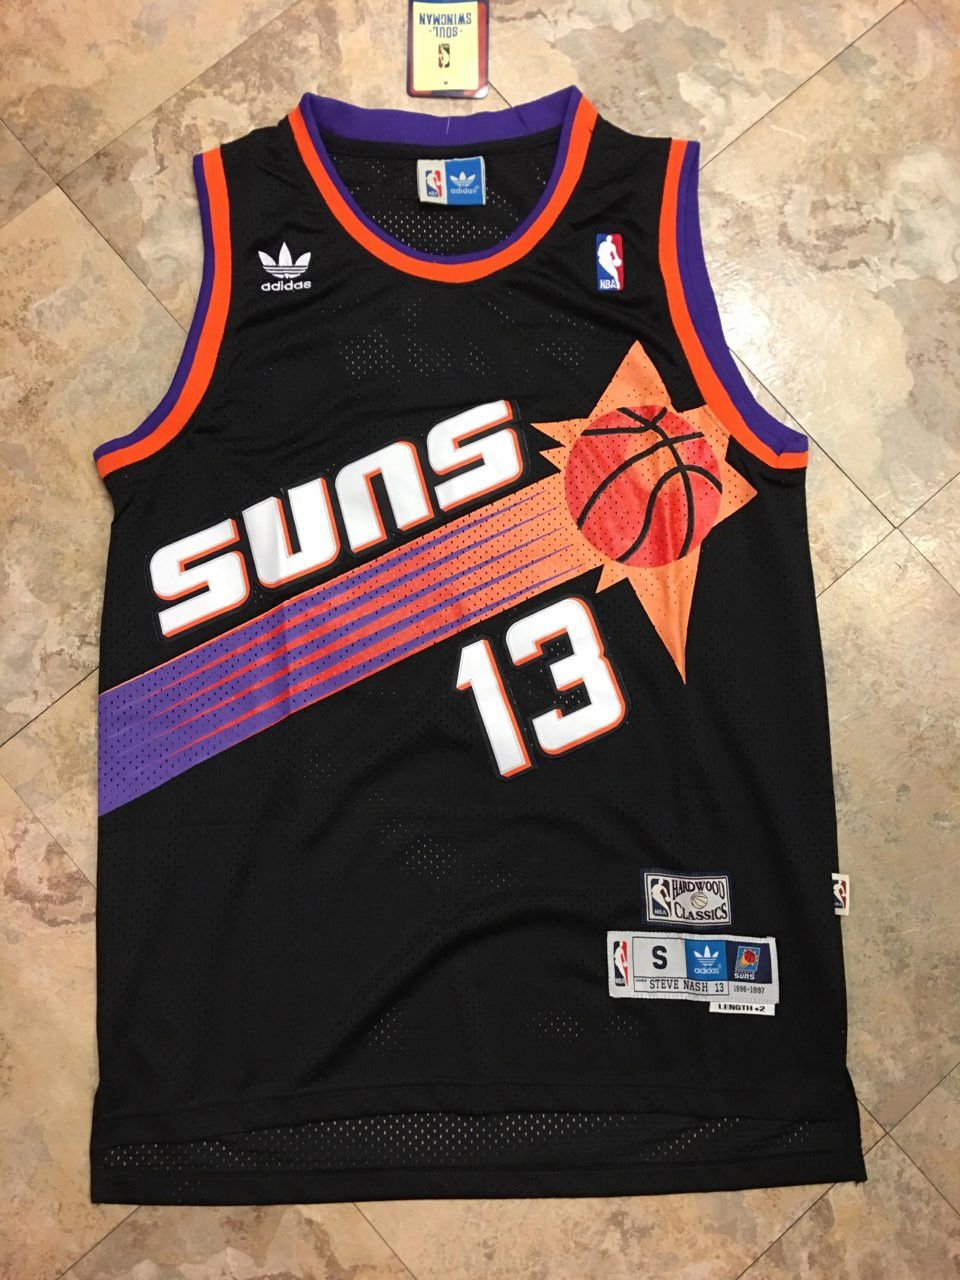 Suns Retro Jersey's. Nash